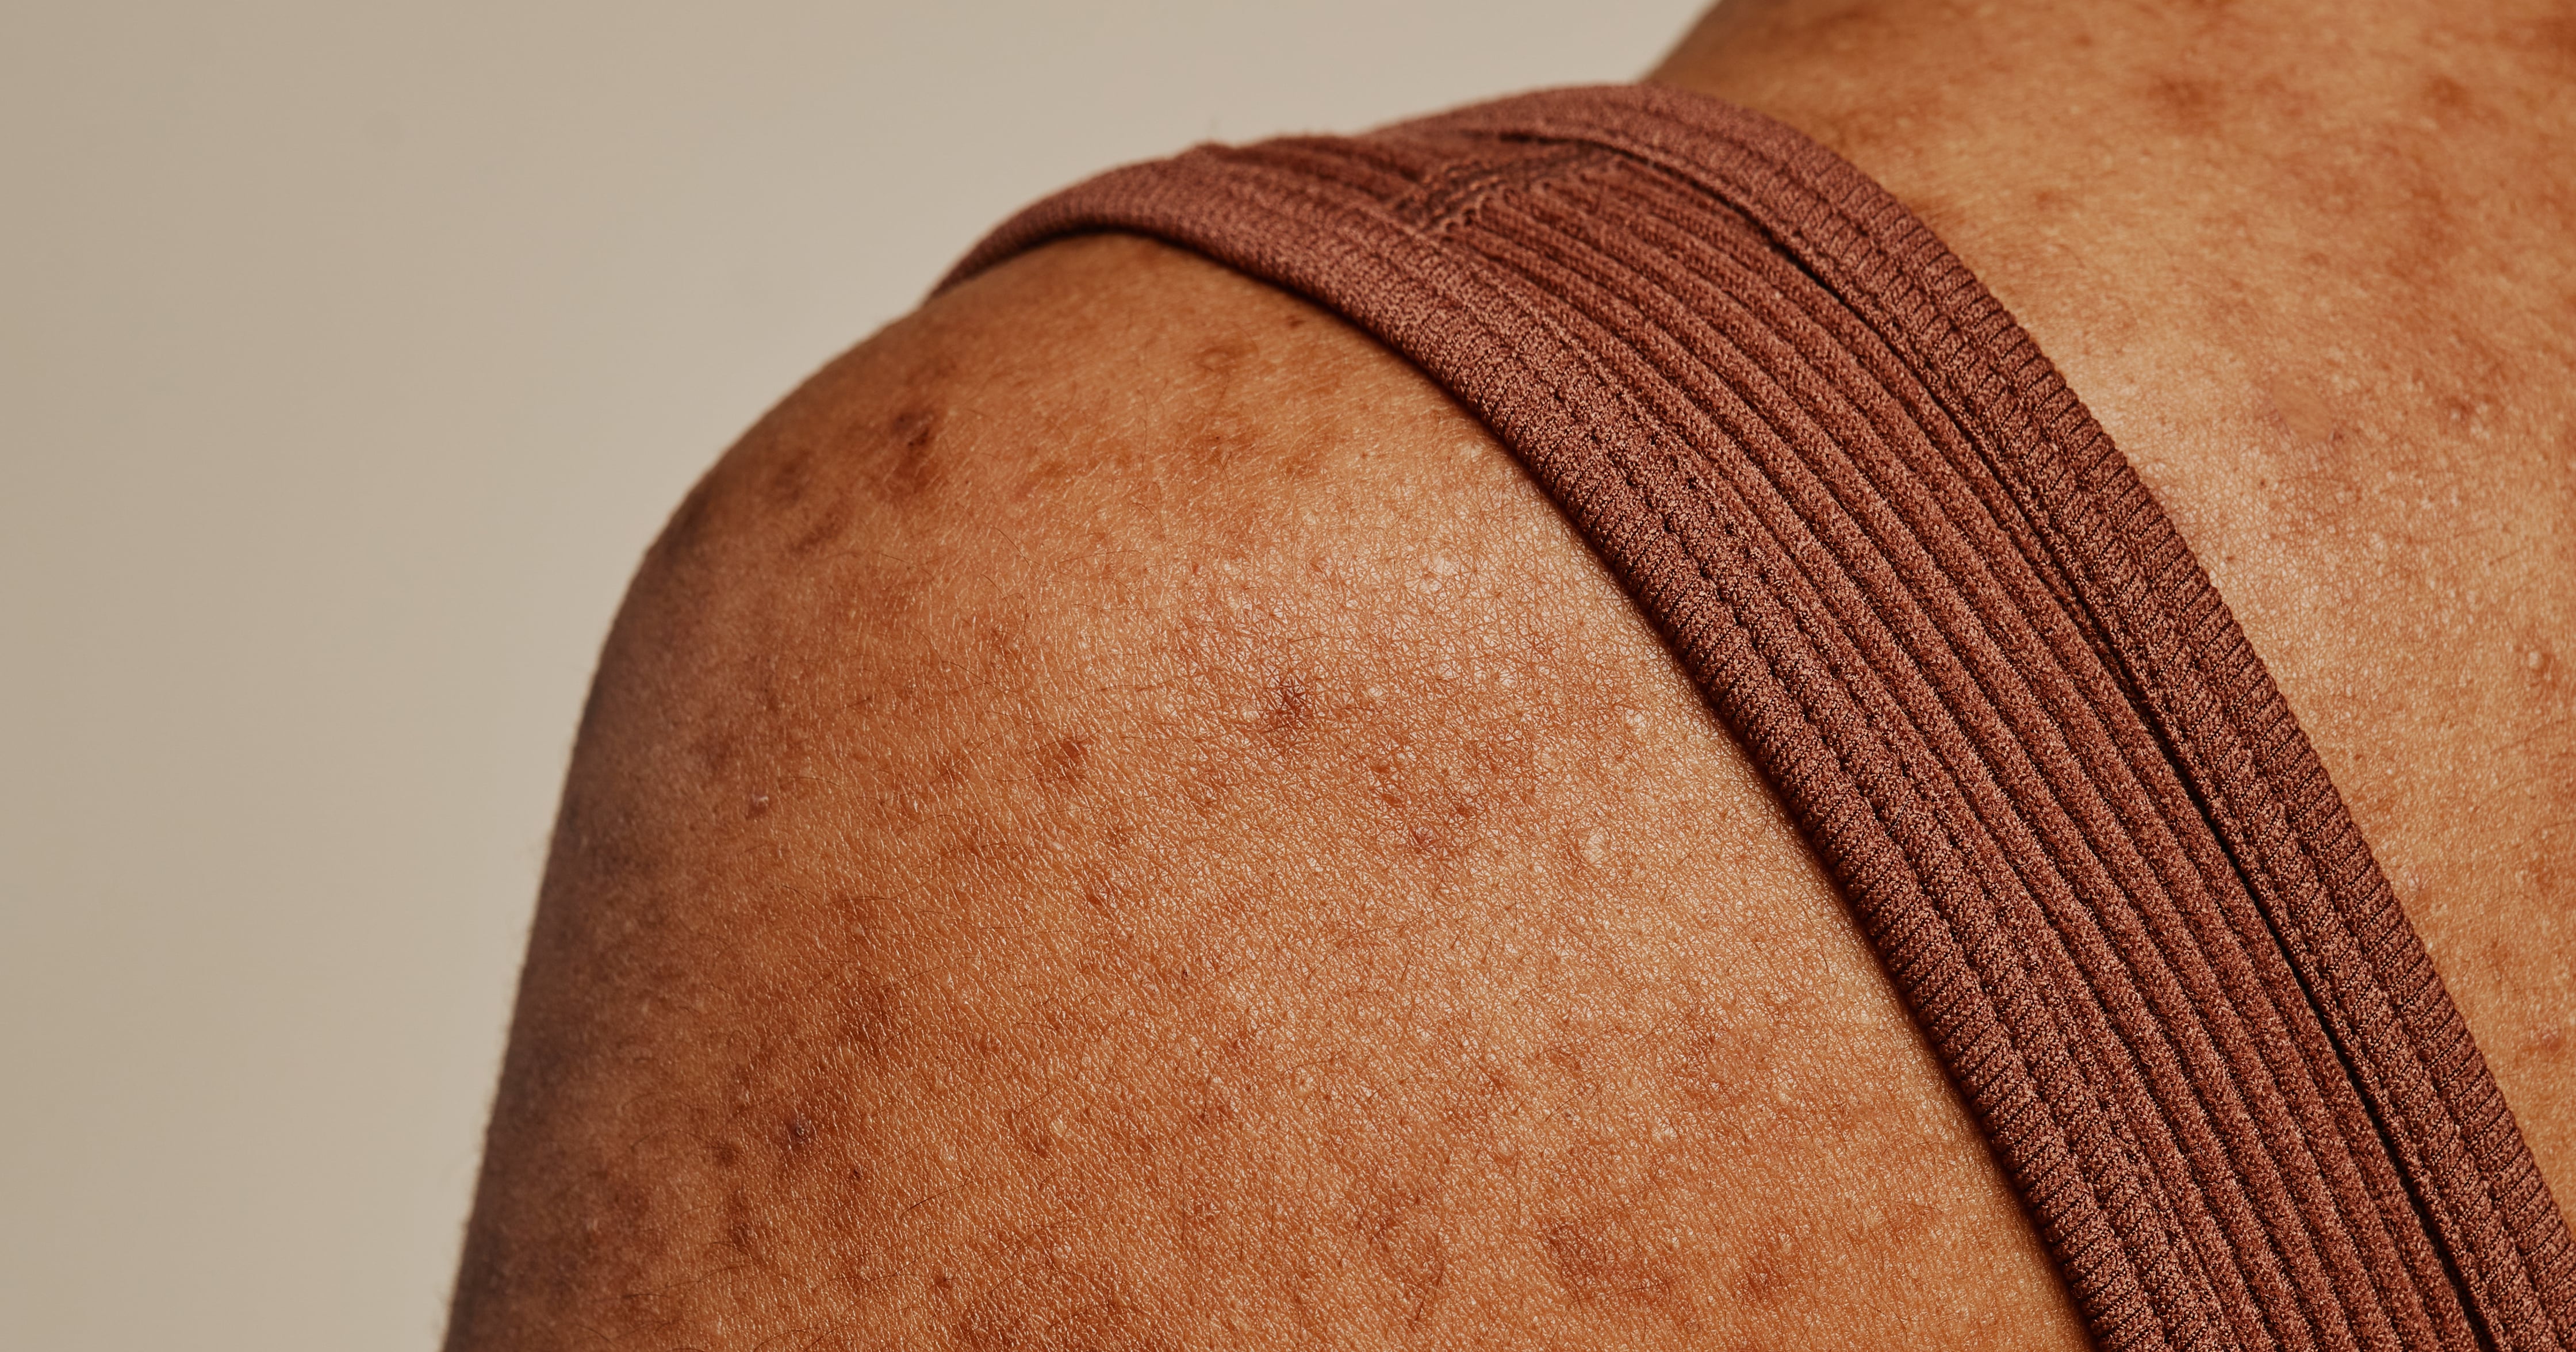 How Hidradenitis Suppurativa Impacts Black Skin